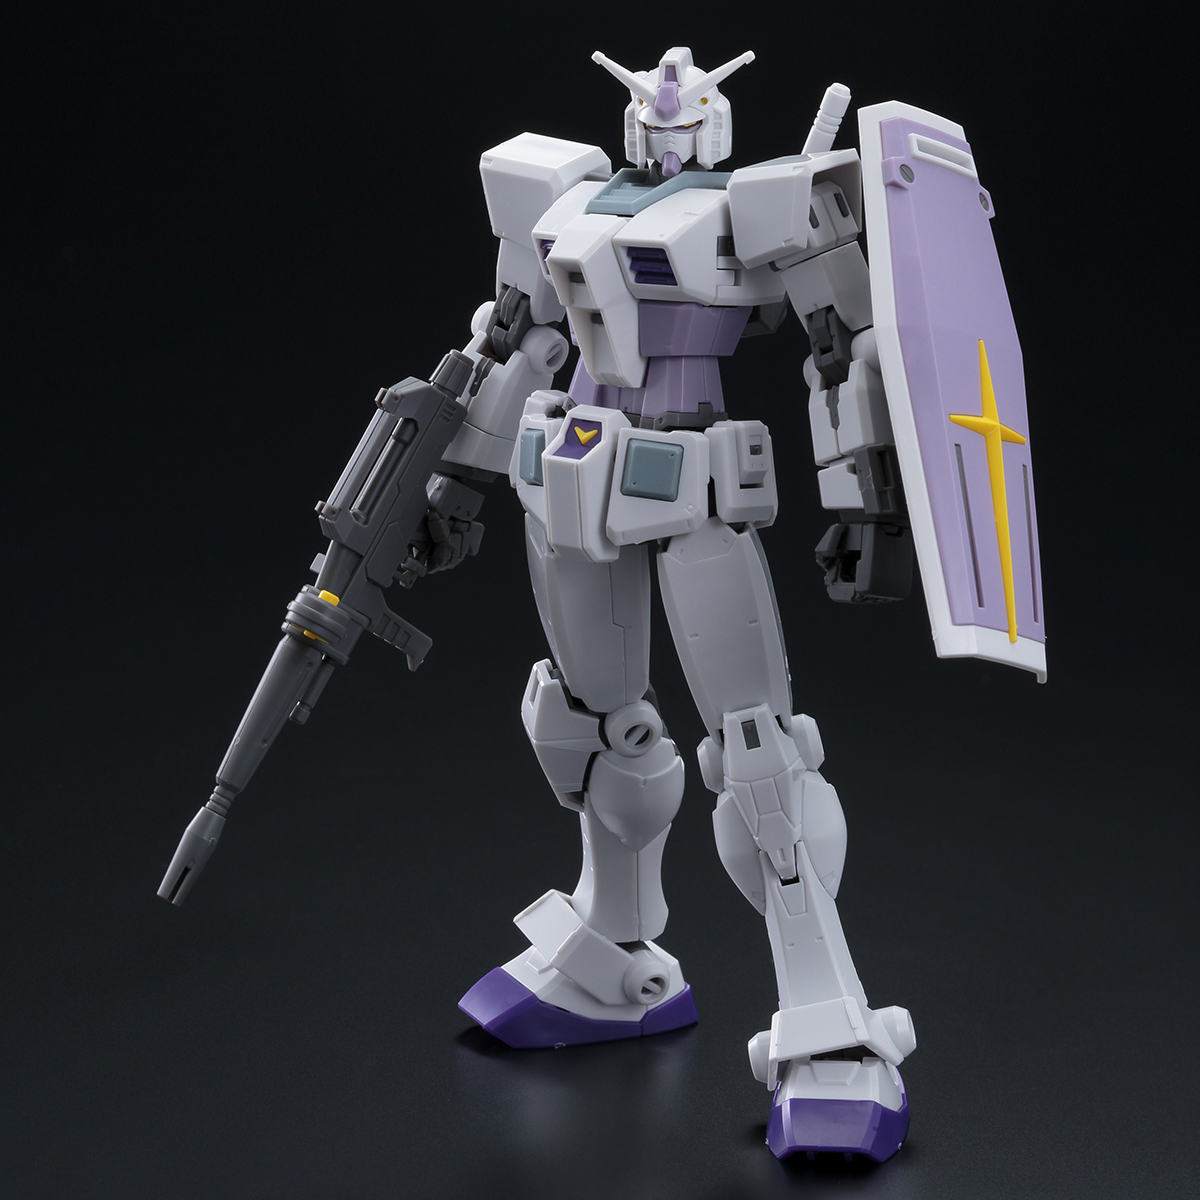 BEYOND GLOBAL Limited Edition Plastic Model Kit Details about   HG 1/144 RX-78-3 G-3 Gundam